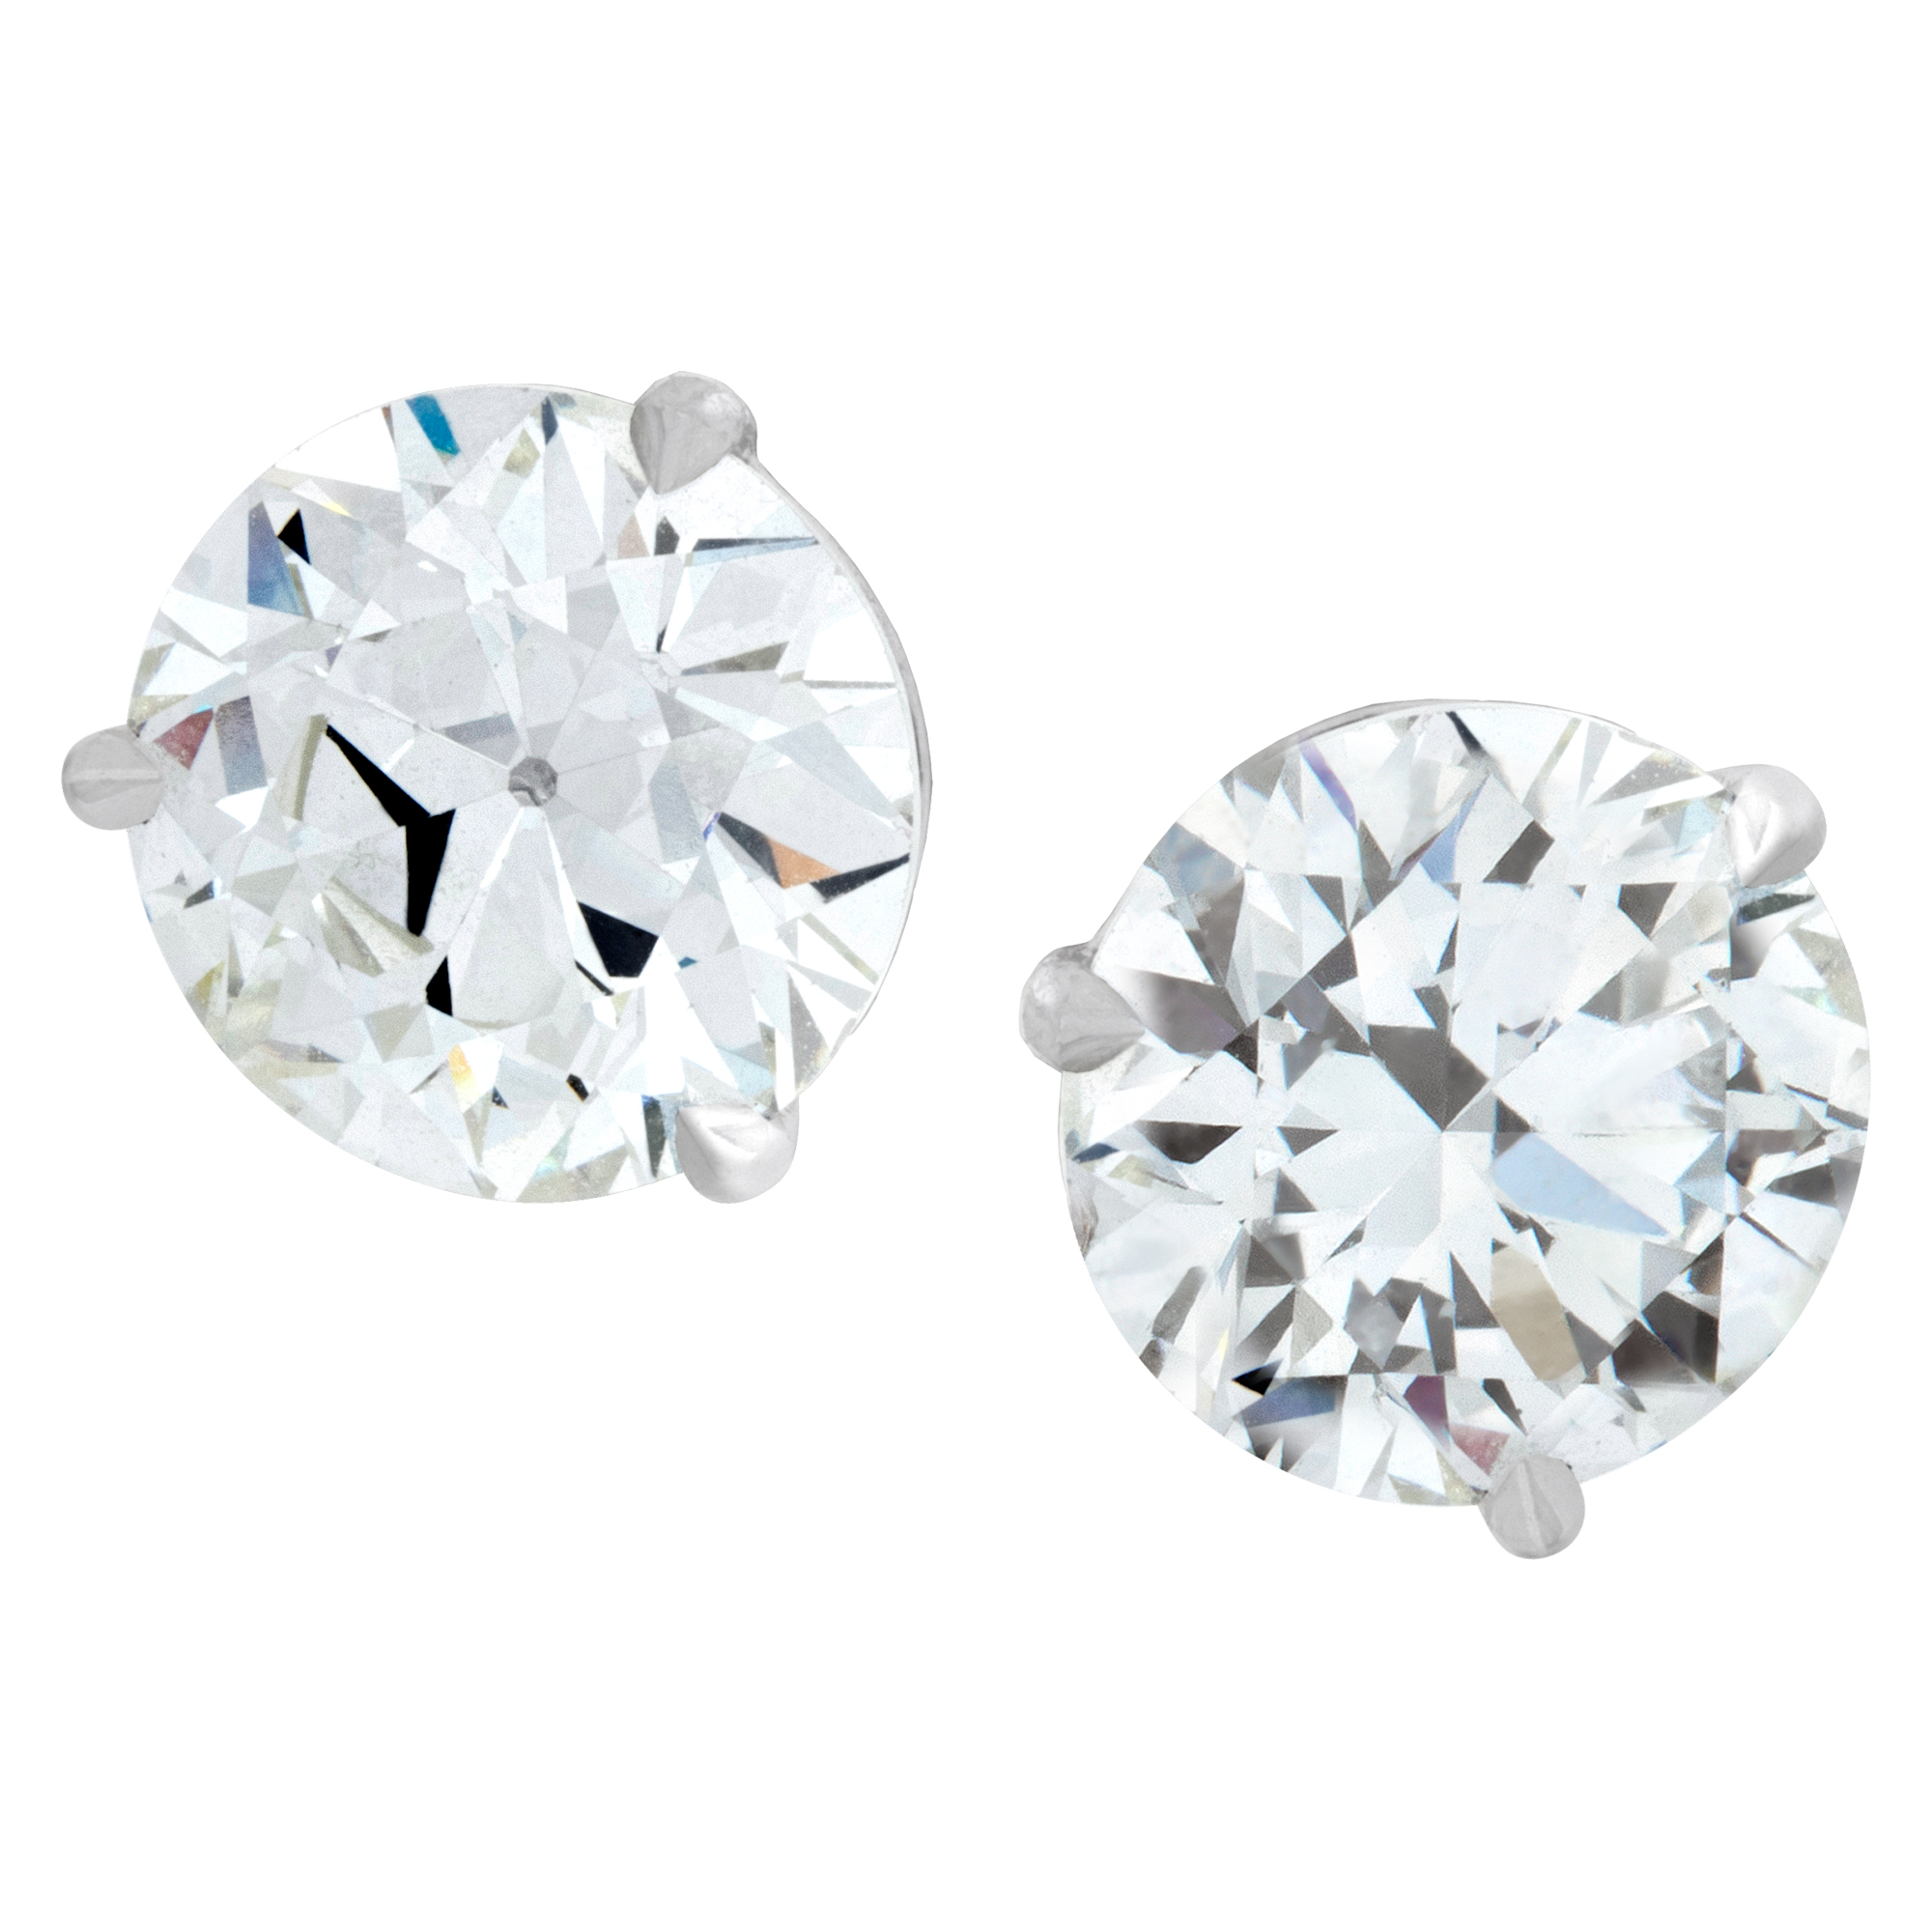 Pair of Gia certified full cut round brilliant diamond stud earringsset in 18K white gold "Martini"